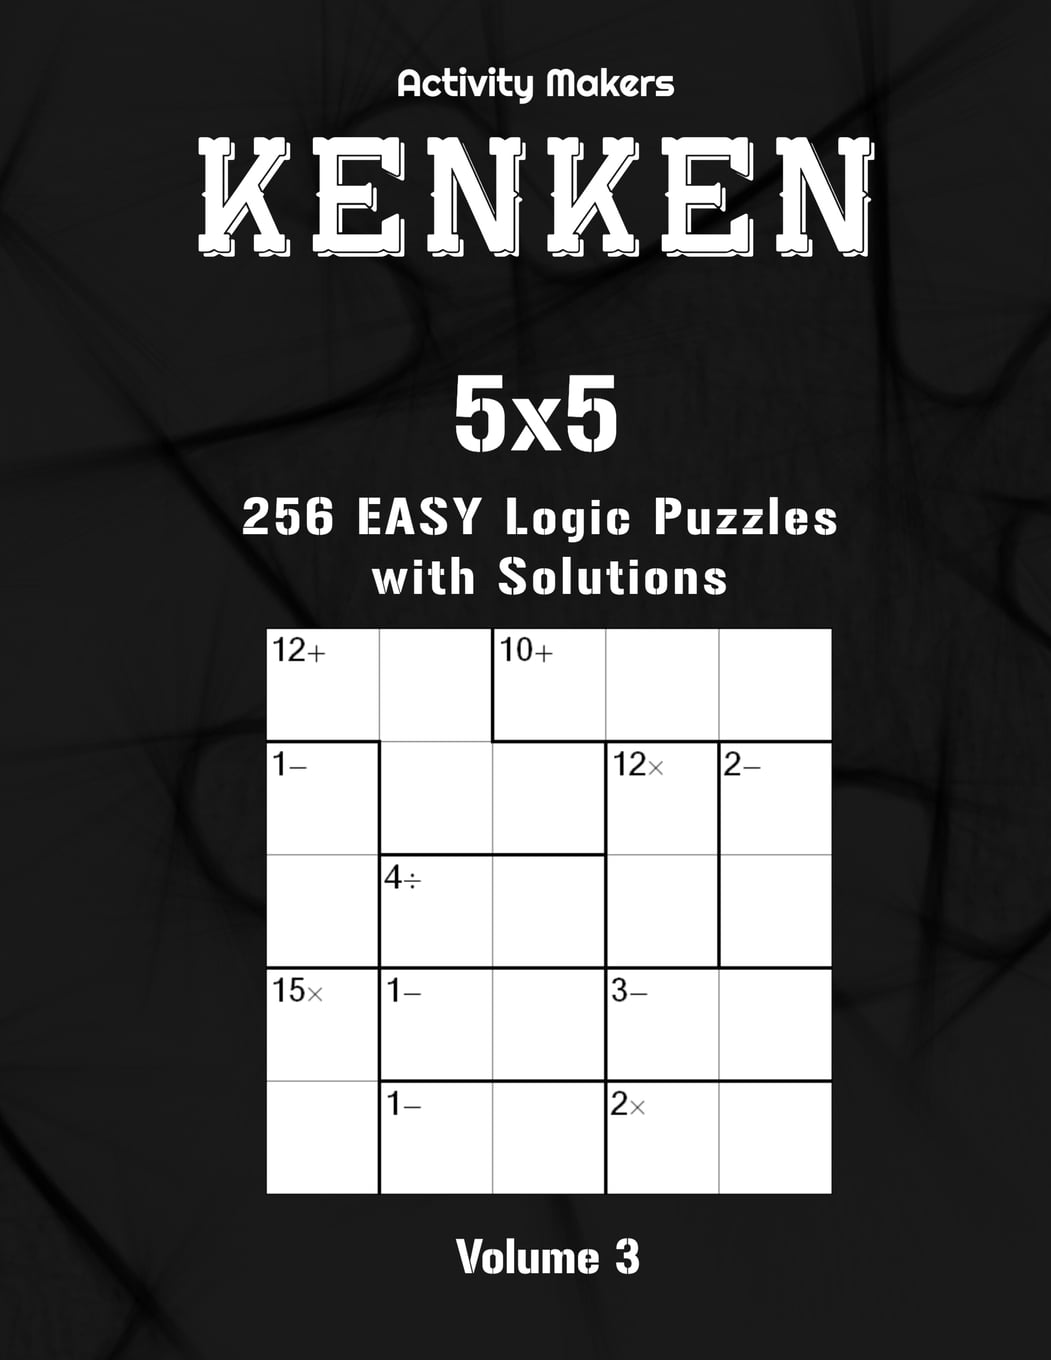 kenken puzzle book 5x5 256 easy logic puzzles volume 3 activity